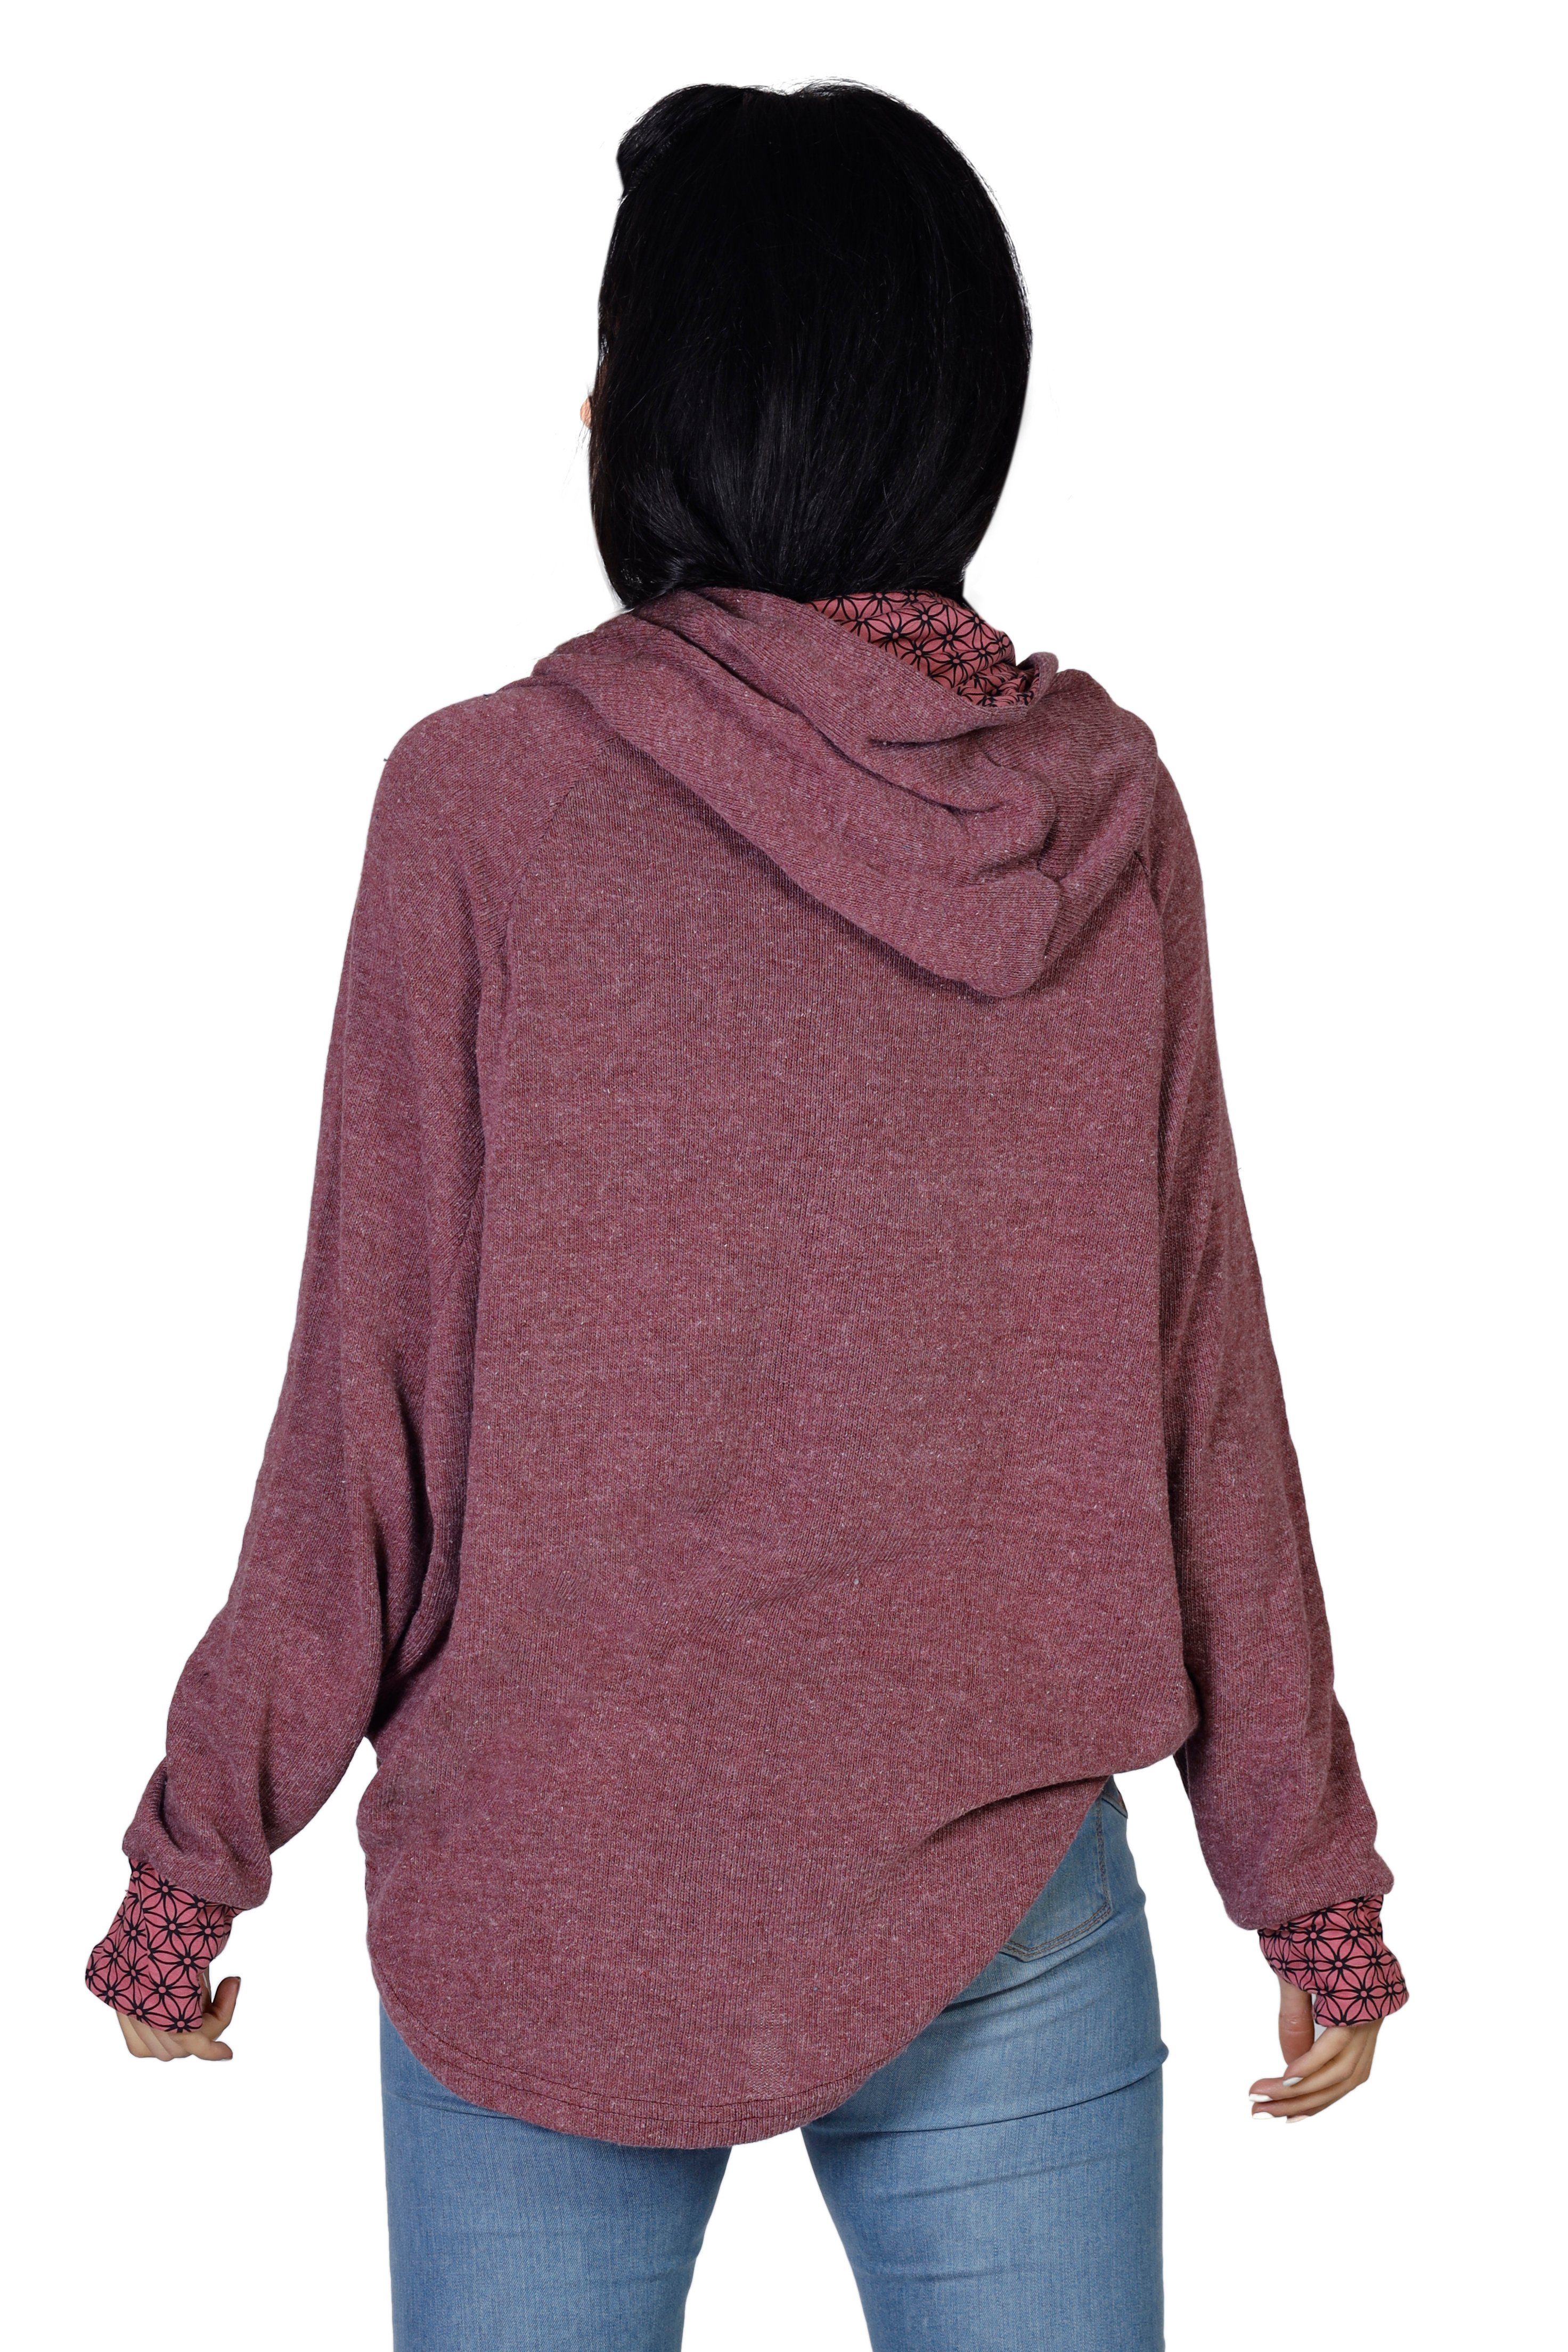 Guru-Shop Longsleeve Hoody, Sweatshirt, alternative Pullover, altrosa Bekleidung -.. Kapuzenpullover